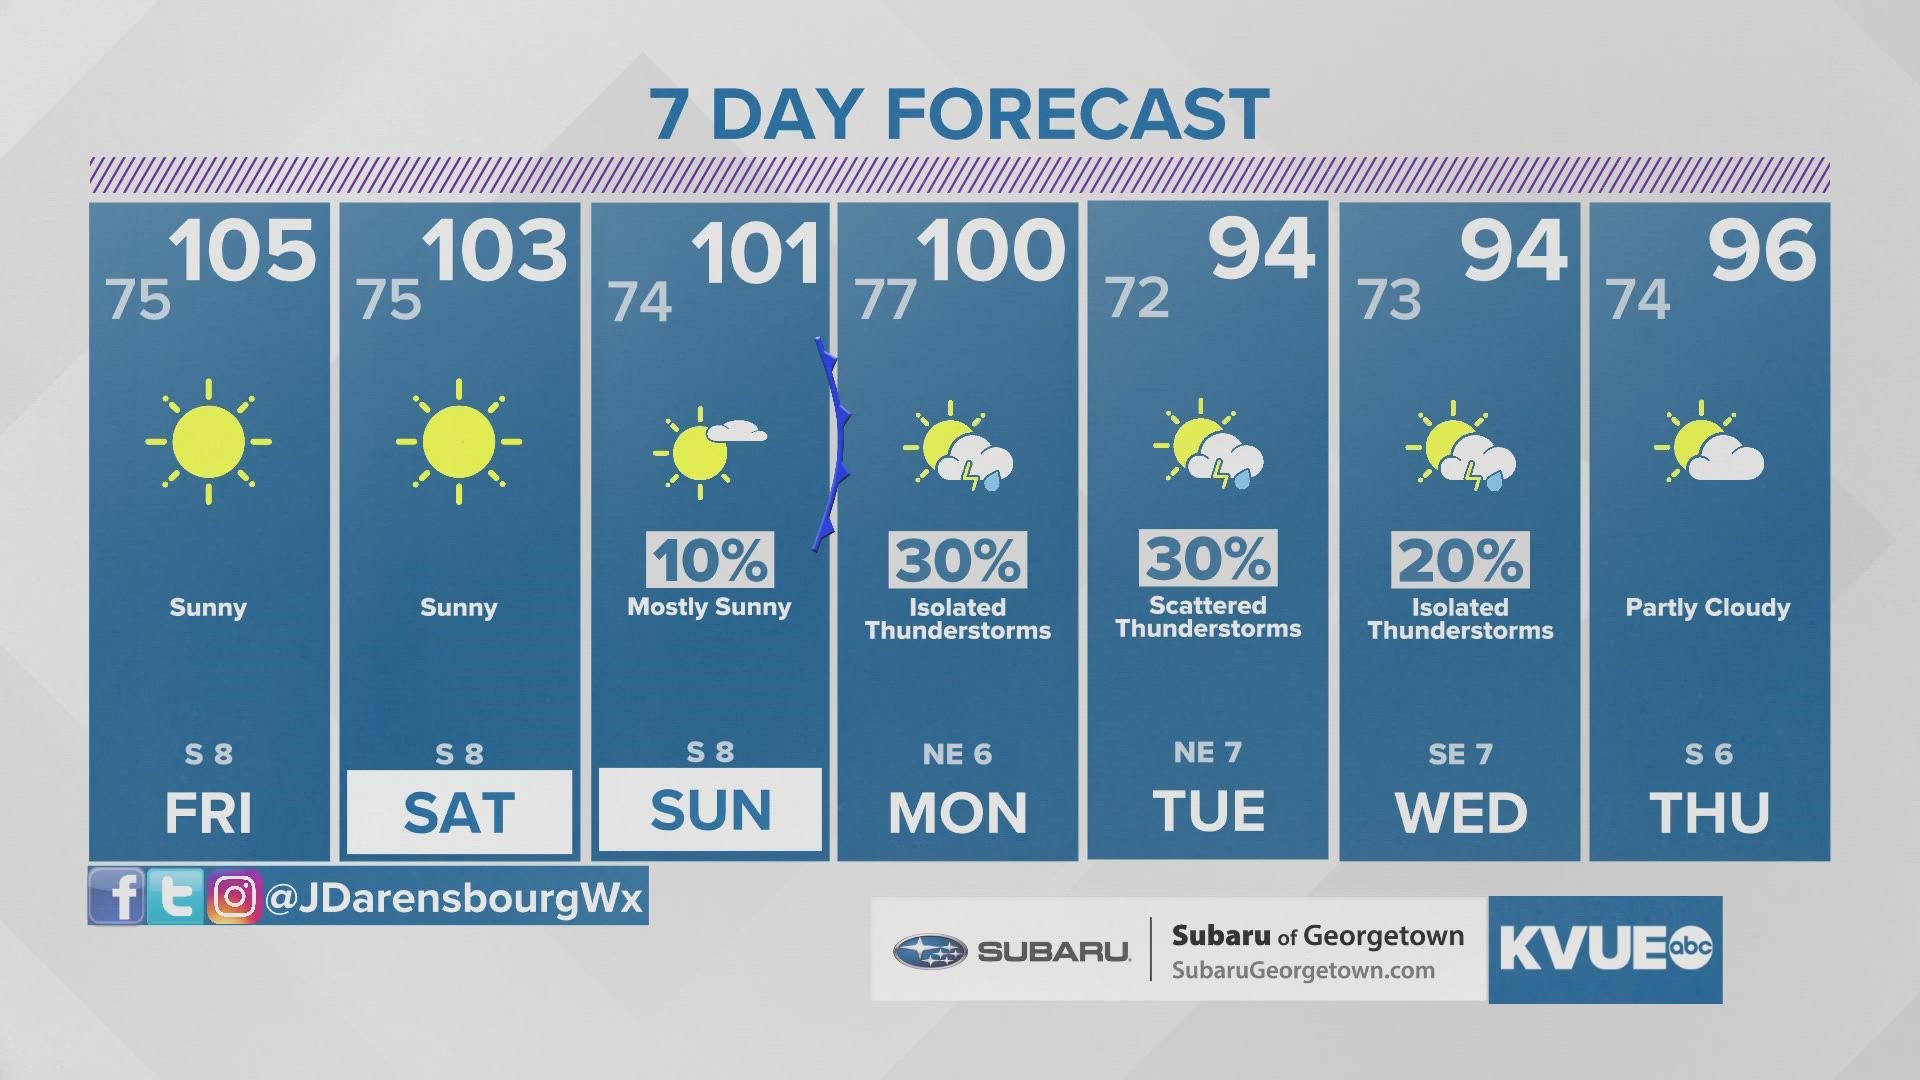 Heat continues, but rain chances resume next week (sort of)